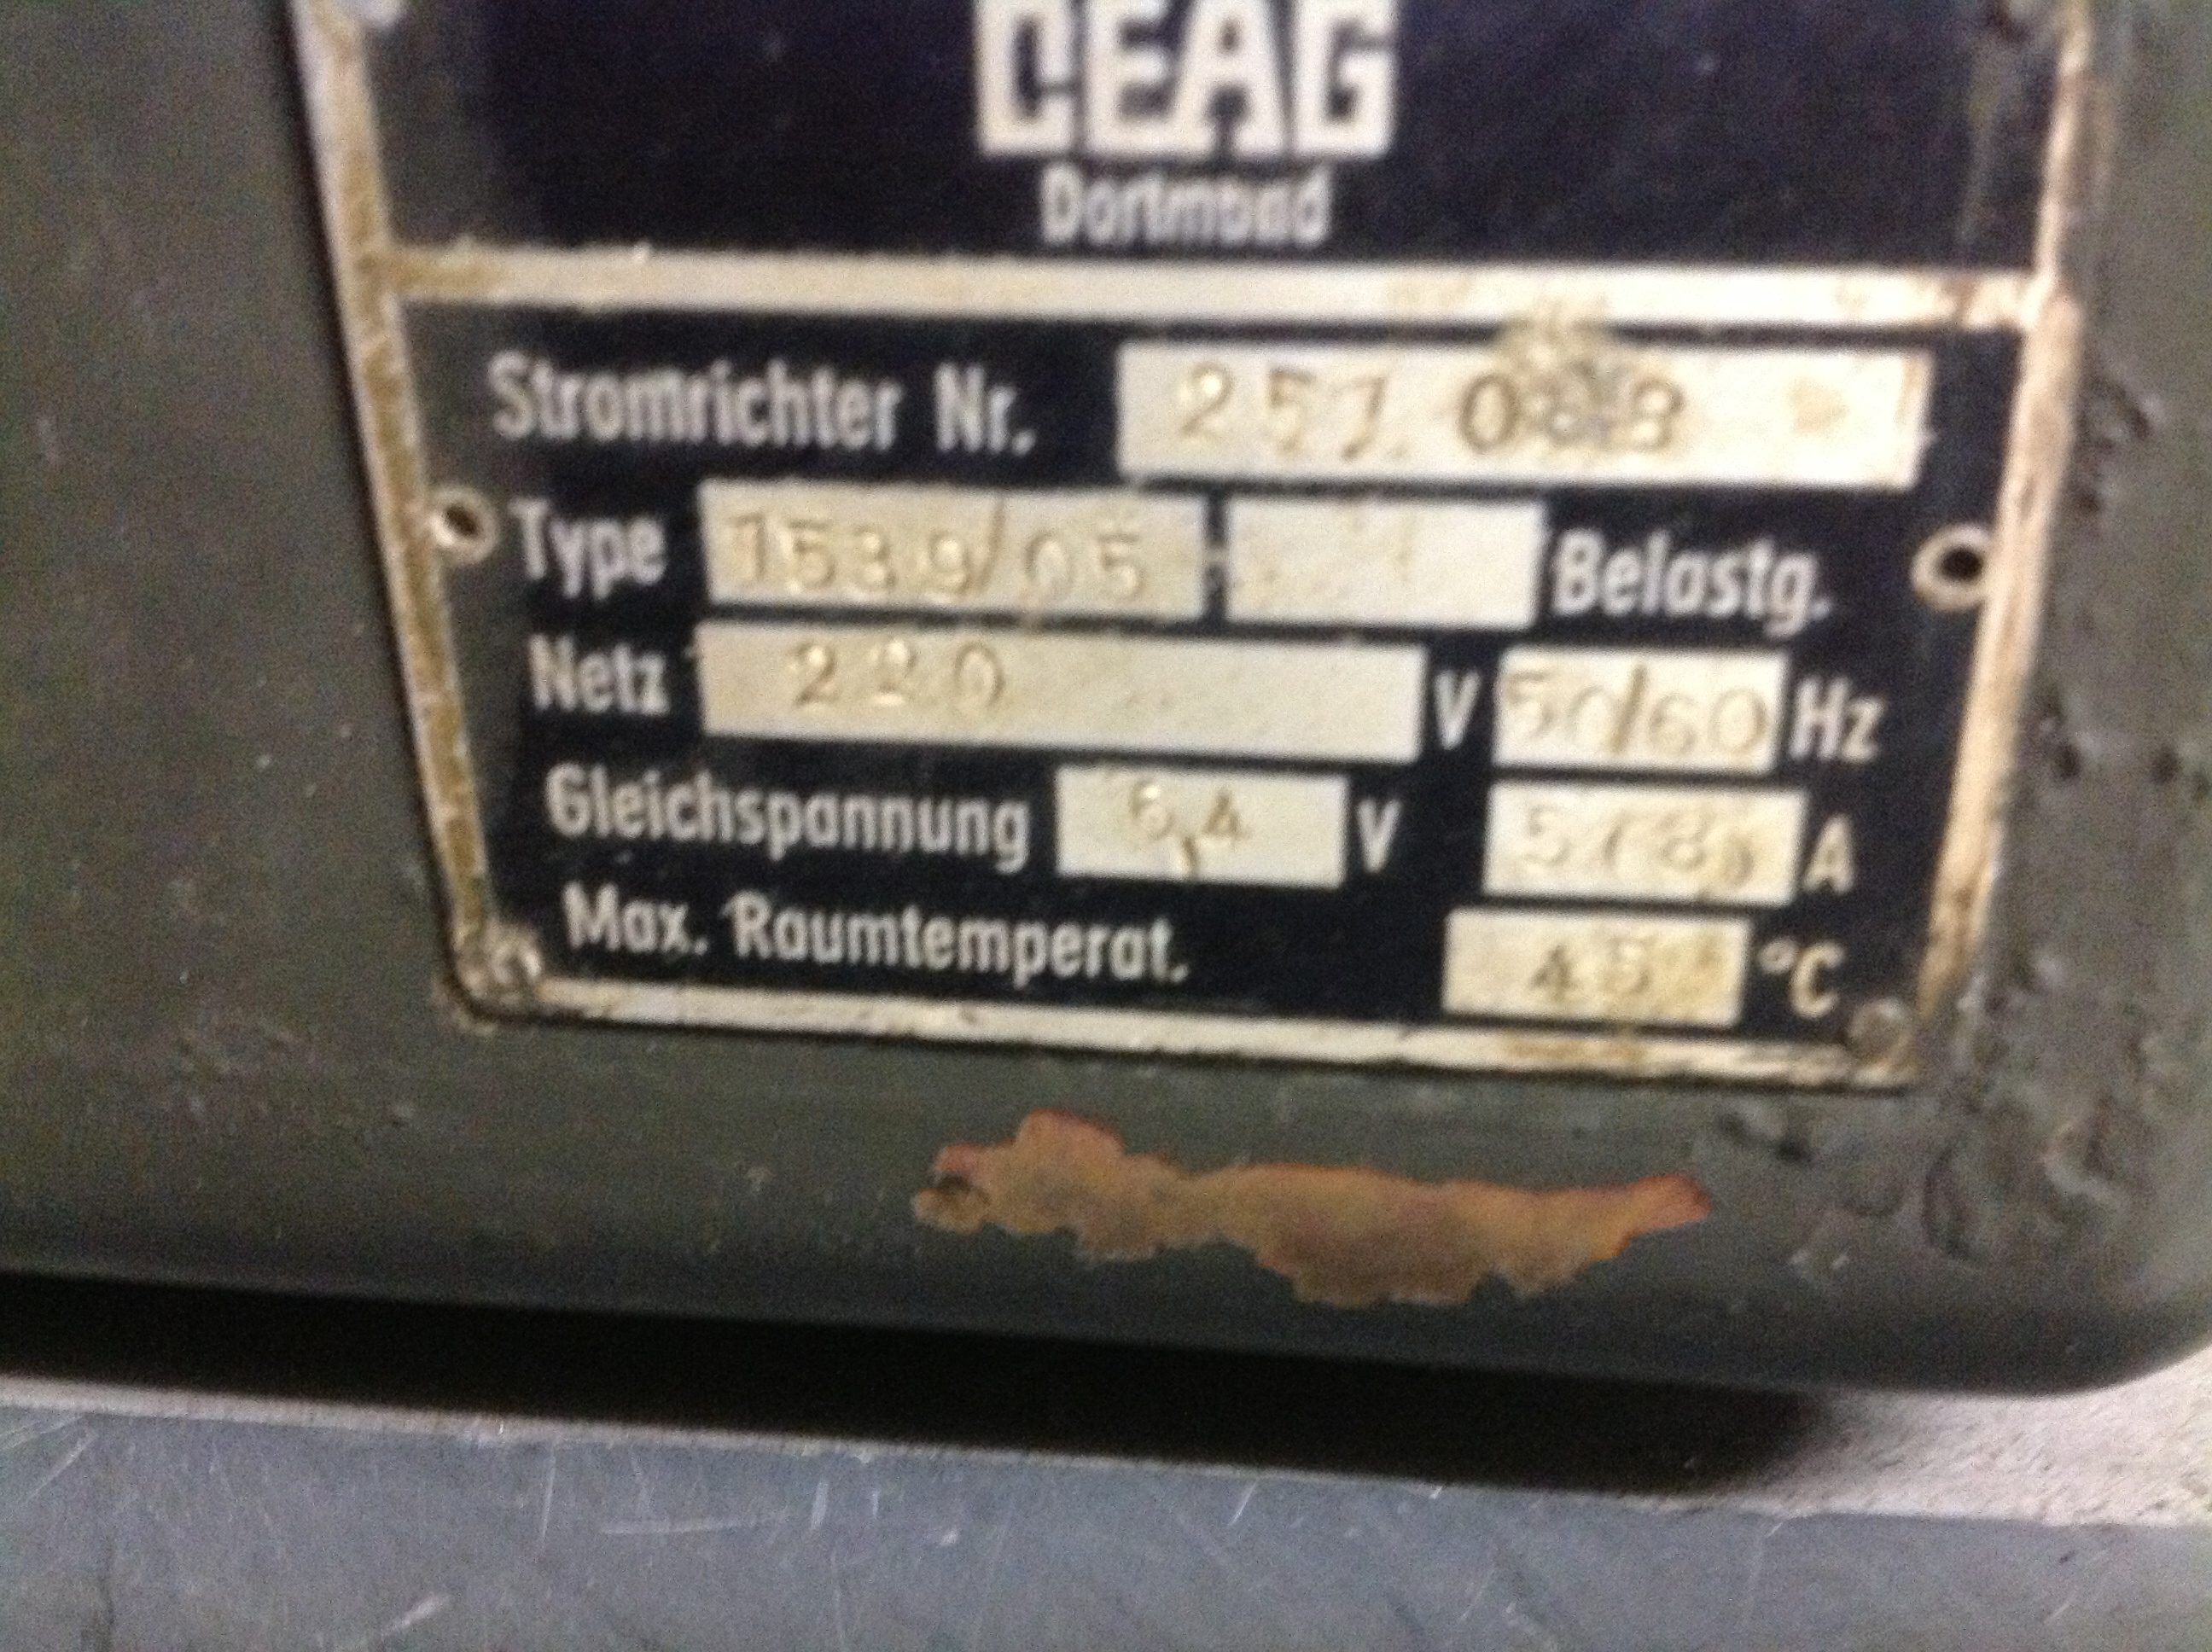 Batterieladegerät CEAG Type 1539/05